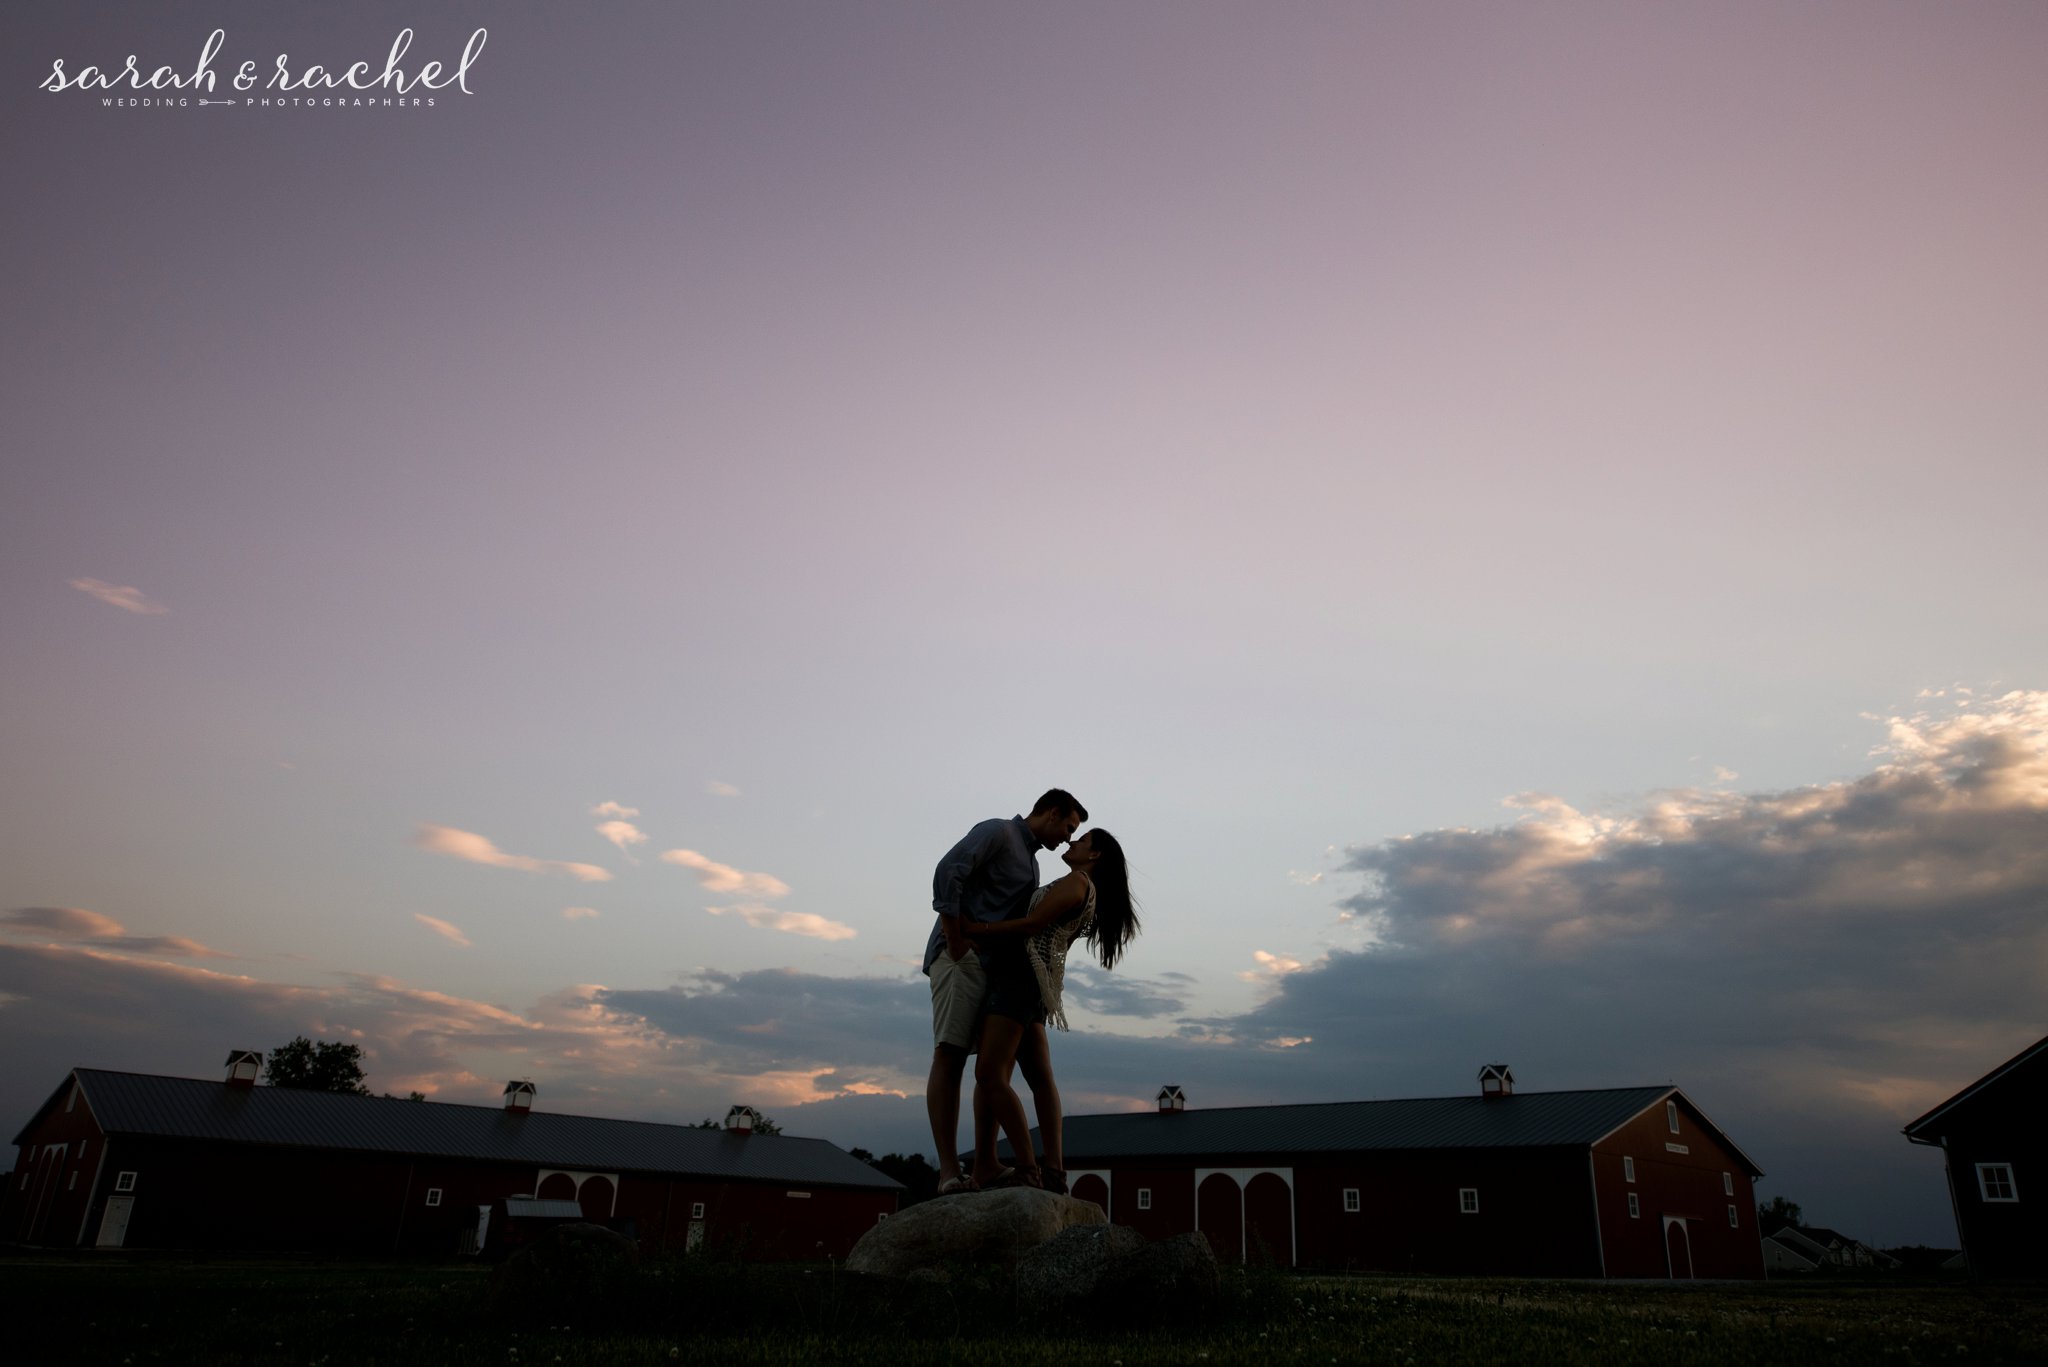 Salomon Farms First Anniversary Session | Fort Wayne Wedding Photographers | Sarah & Rachel